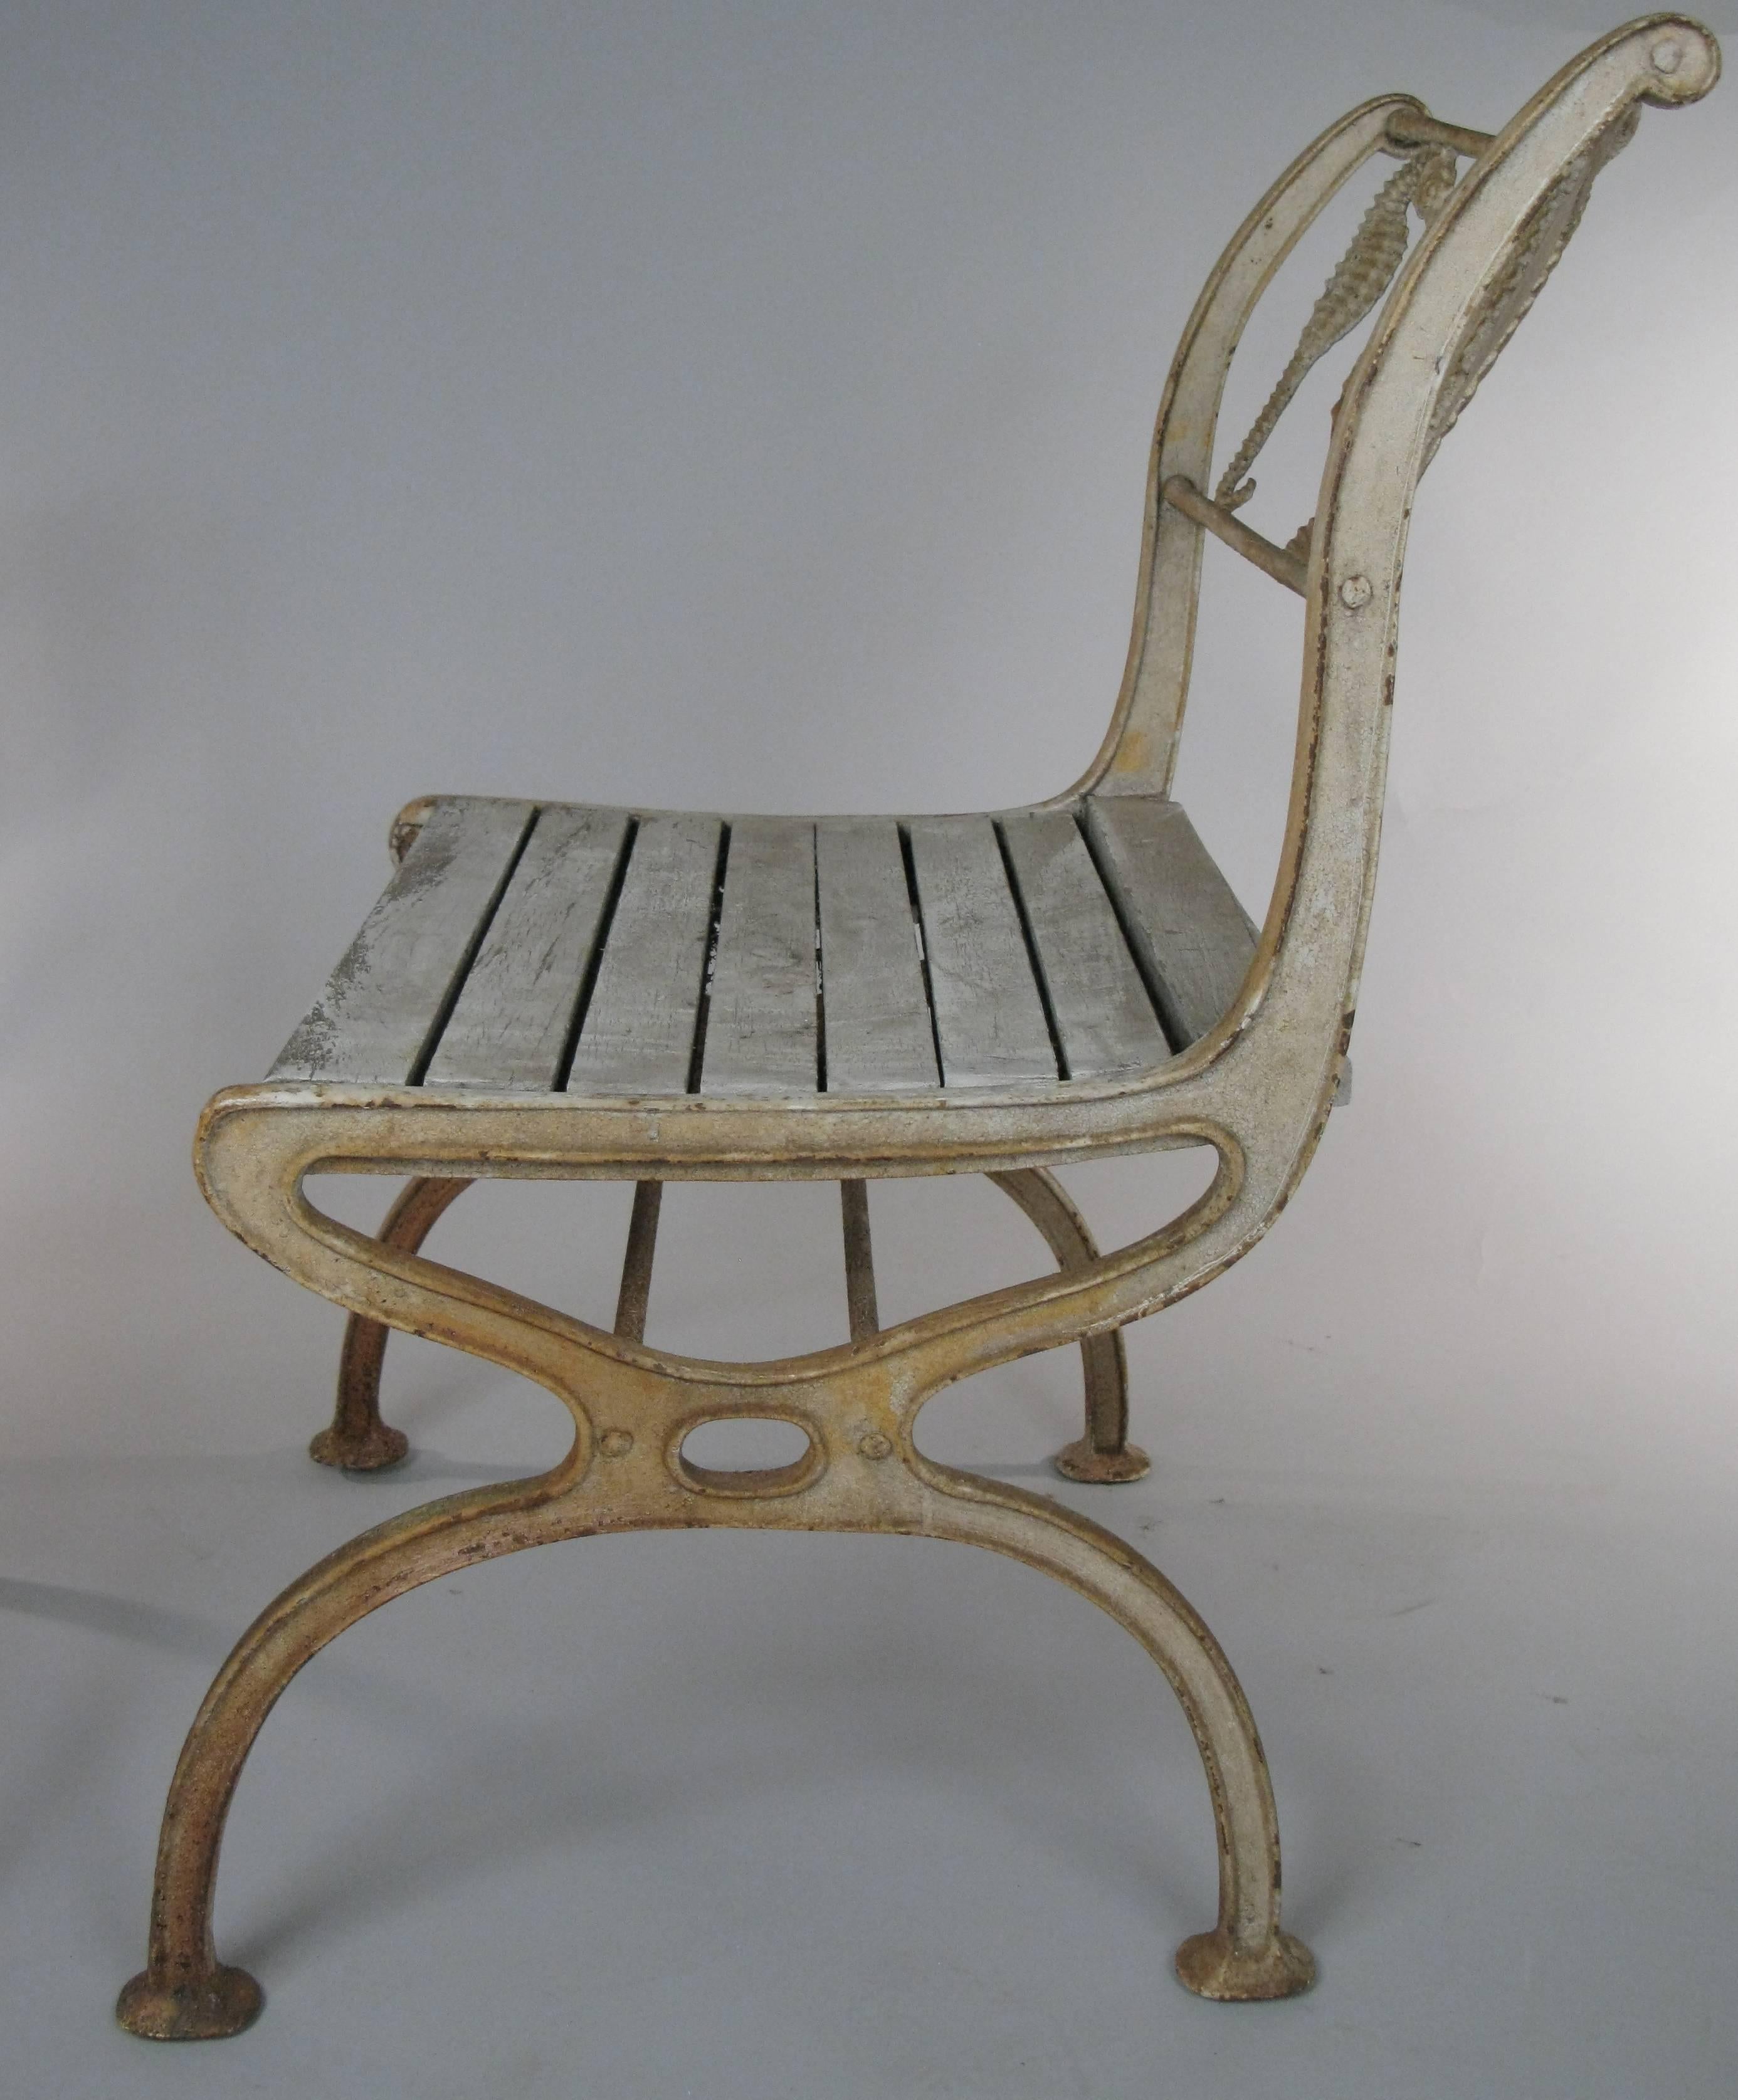 seashell shaped chair